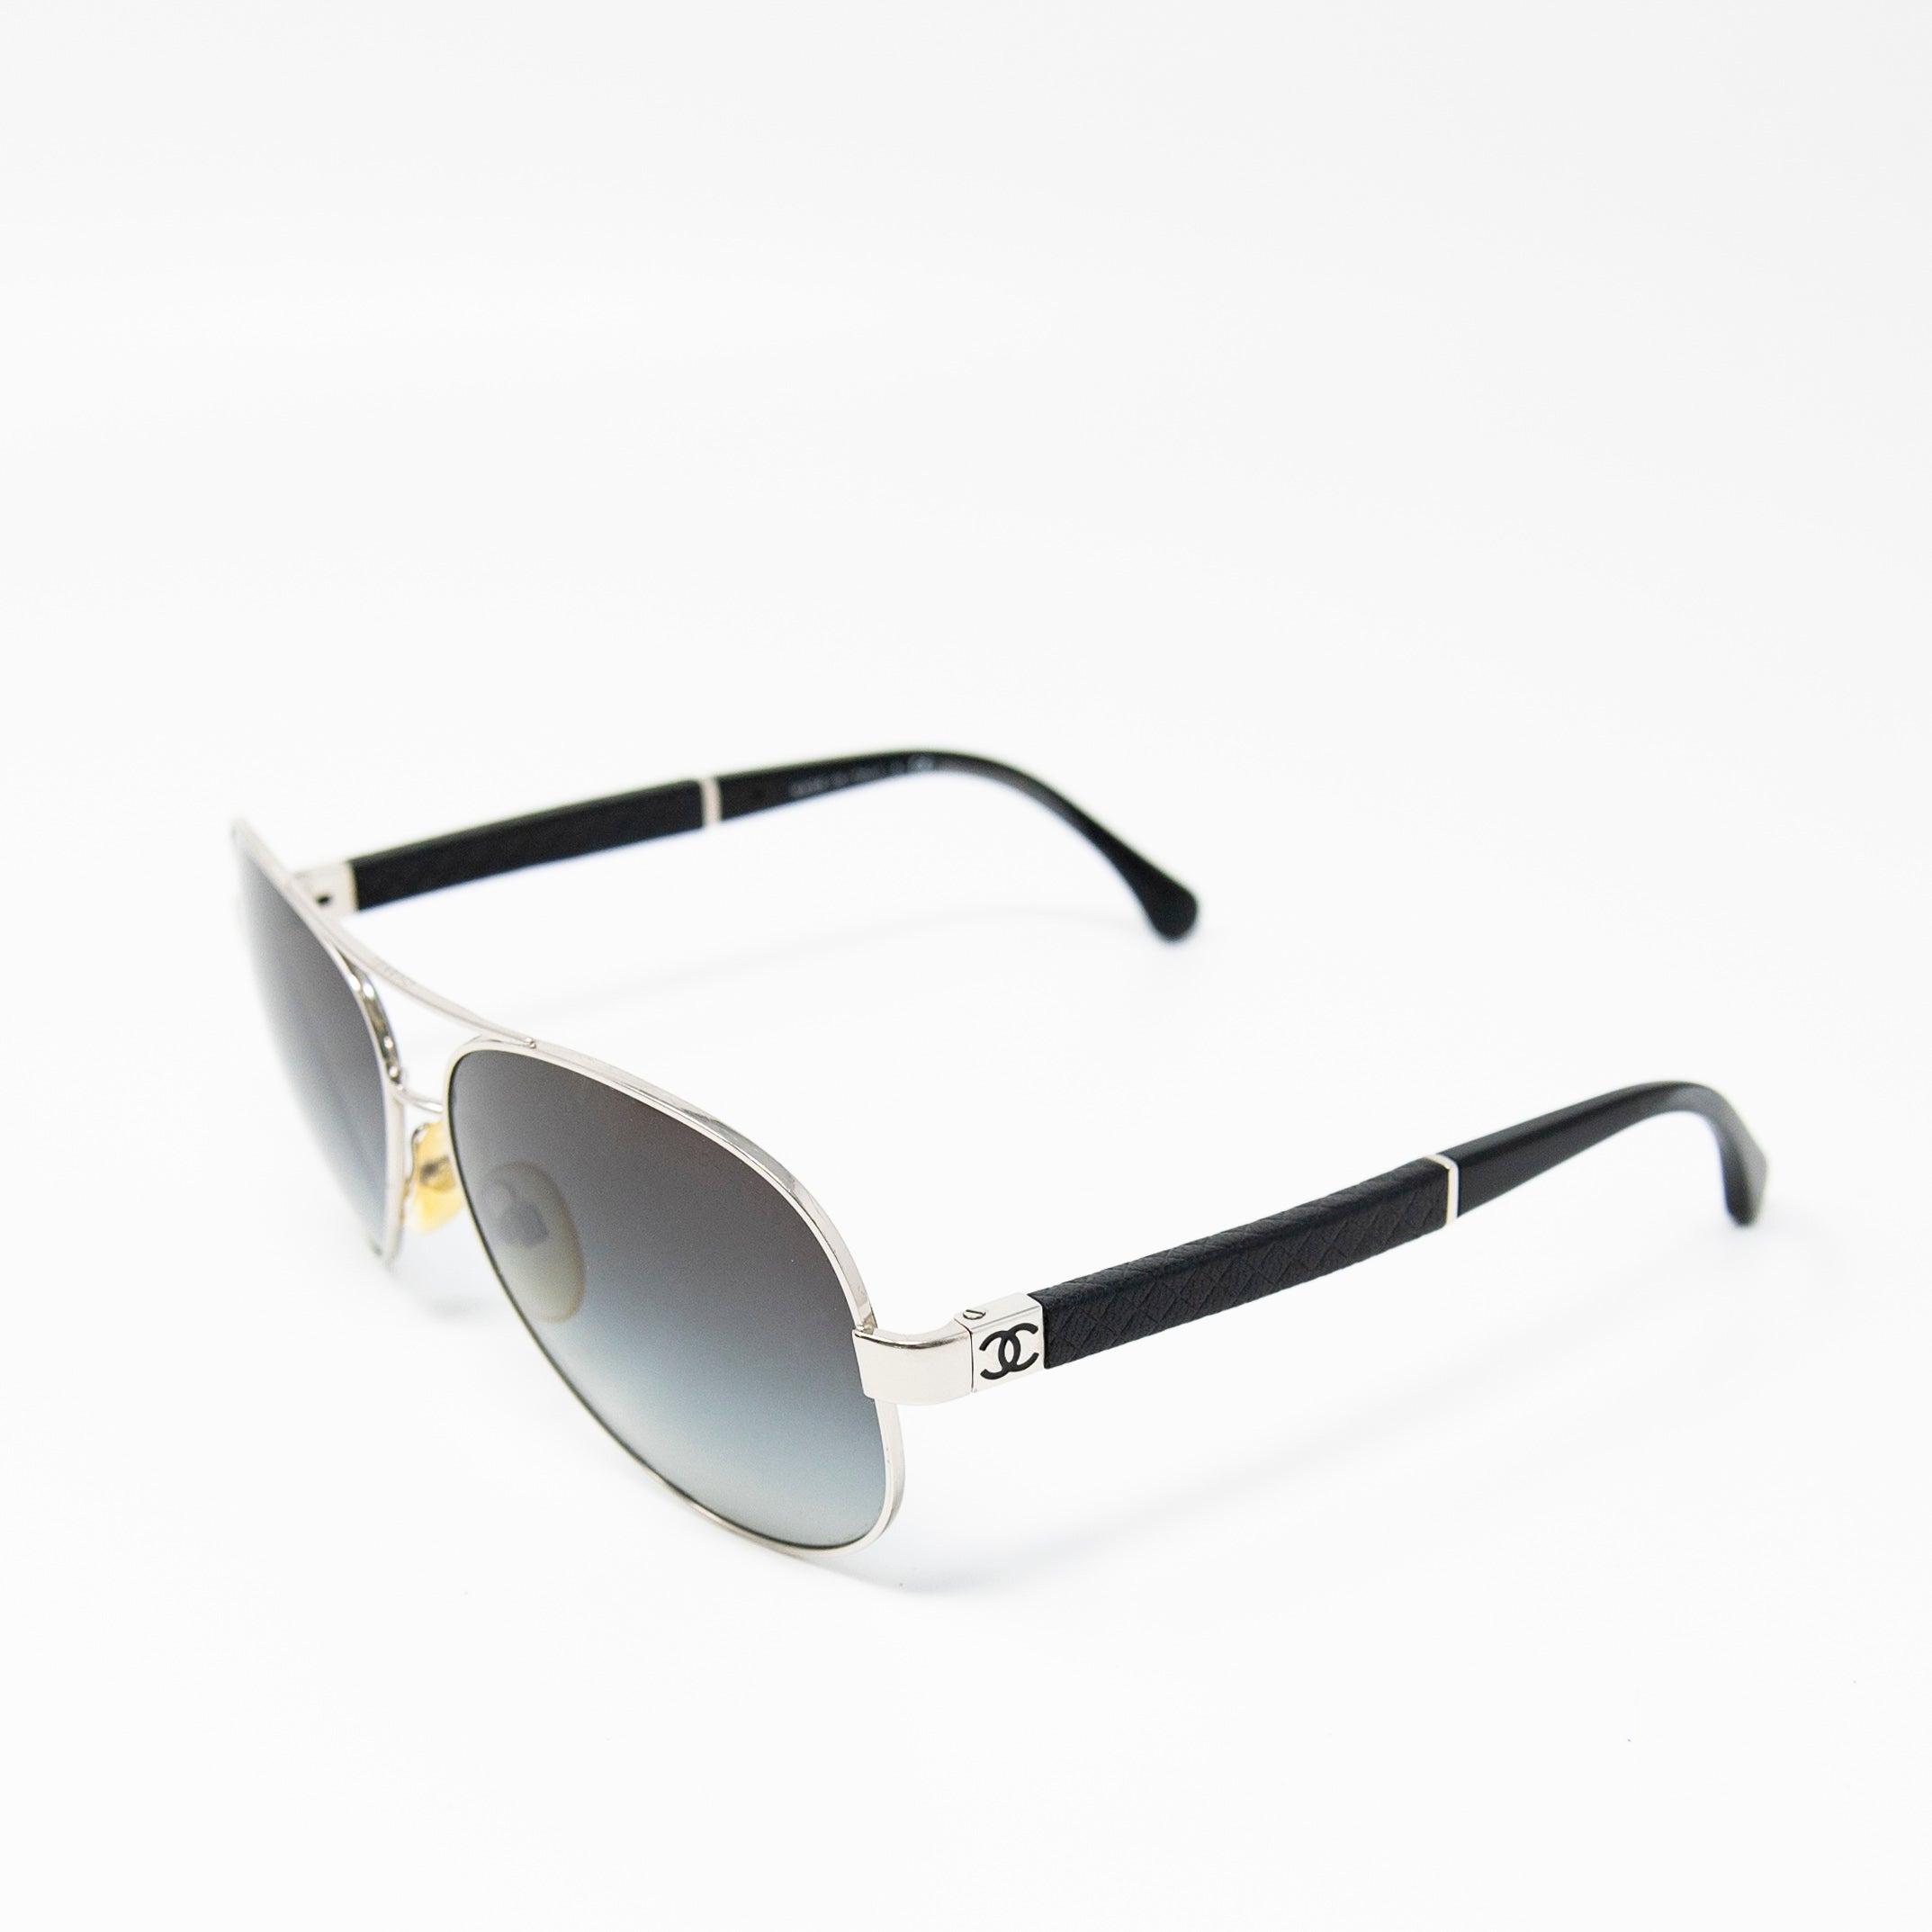 Chanel Black Aviator Sunglasses